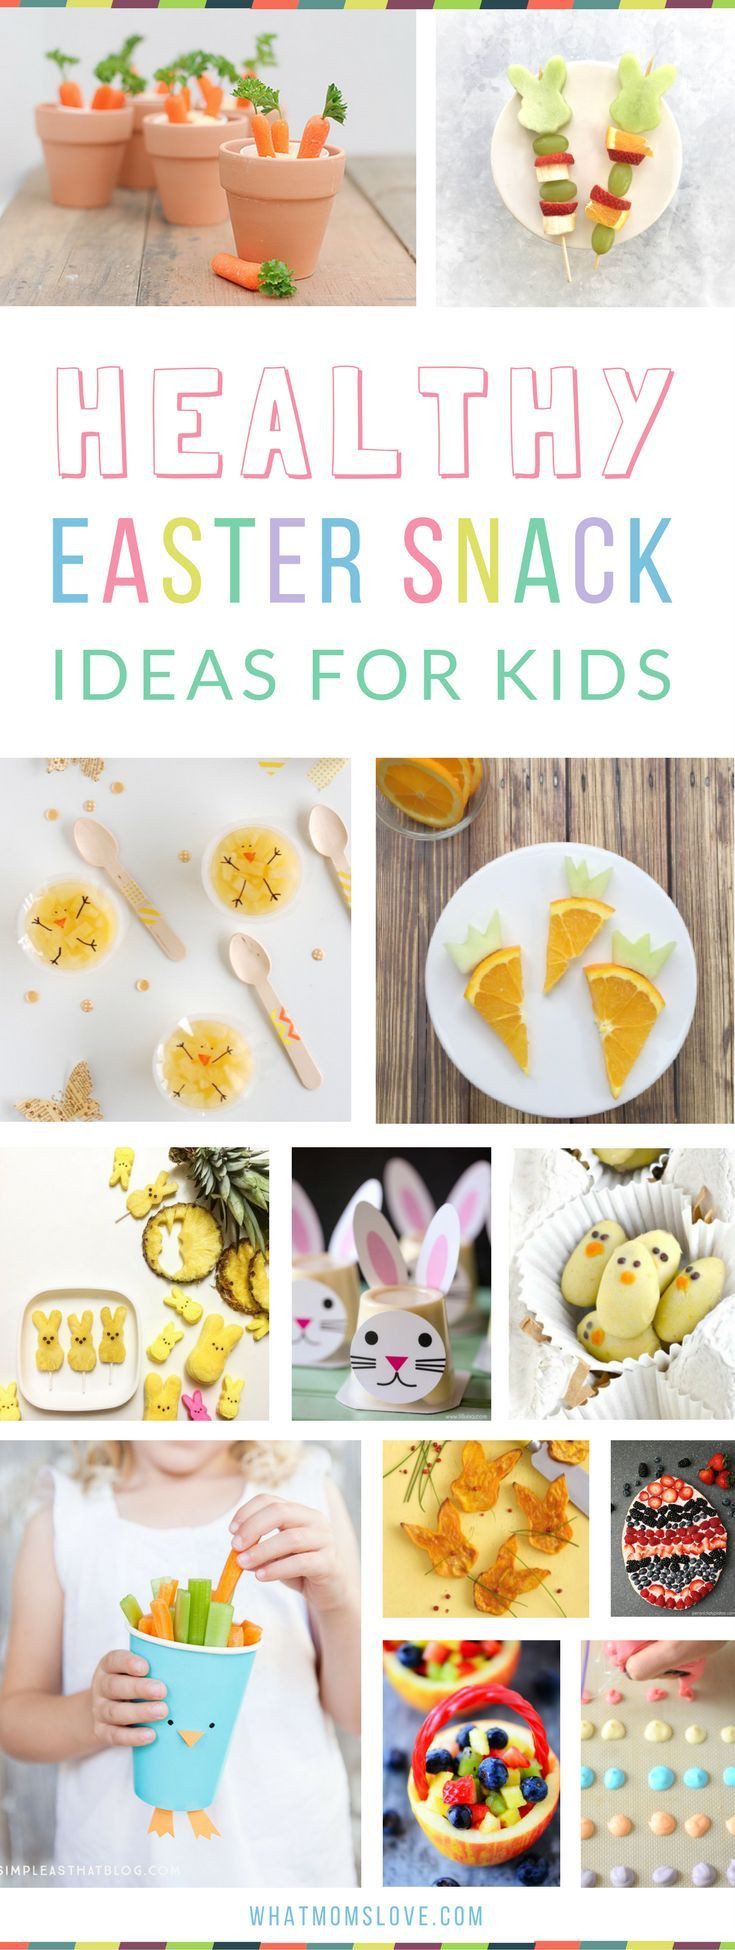 Easter Party Snack Ideas For Kids
 17 Best ideas about Preschool Snacks on Pinterest